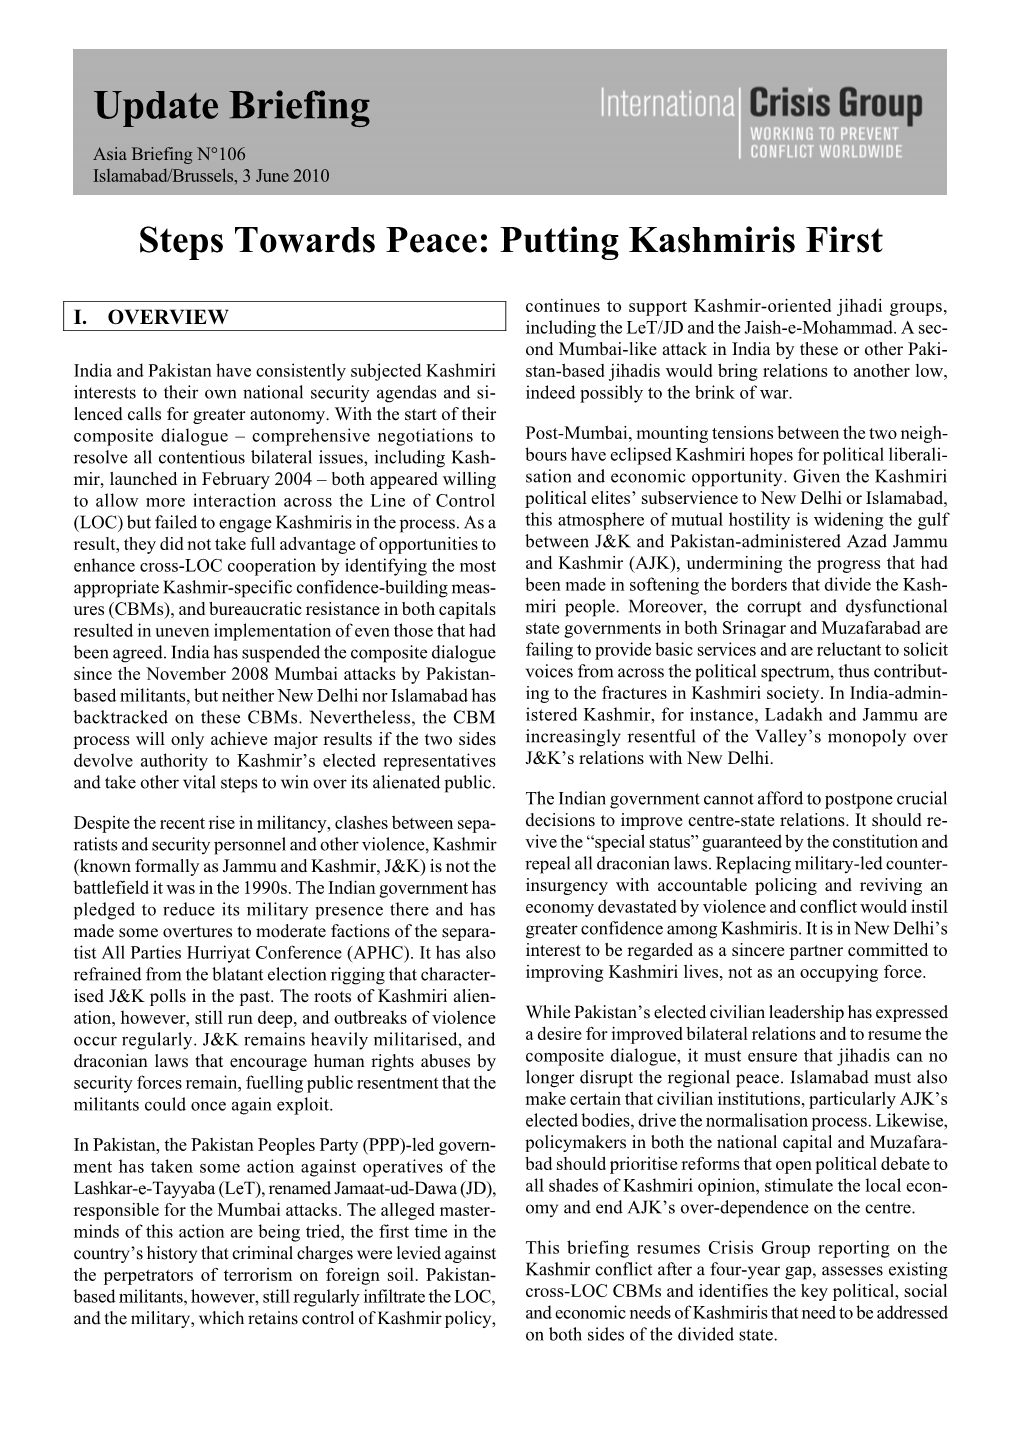 Steps Towards Peace: Putting Kashmiris First